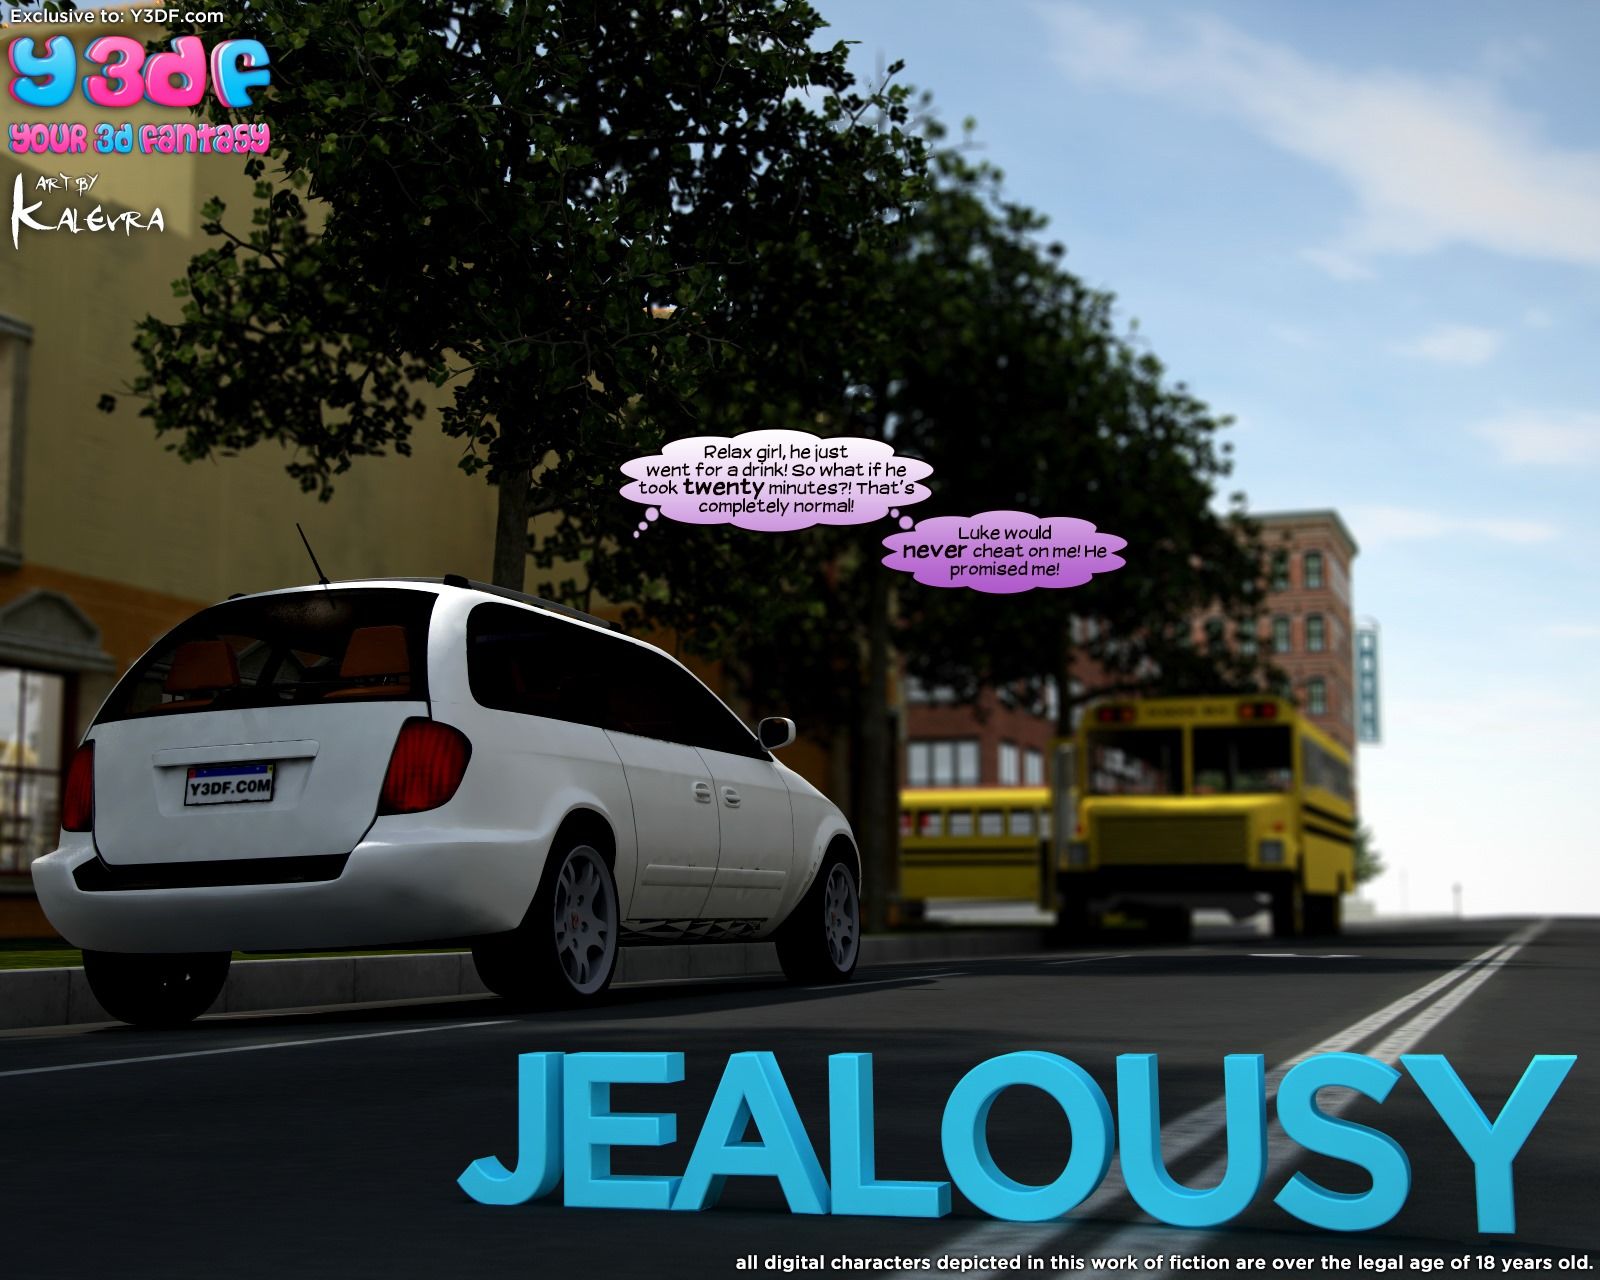 Y3DF – Jealousy page 1